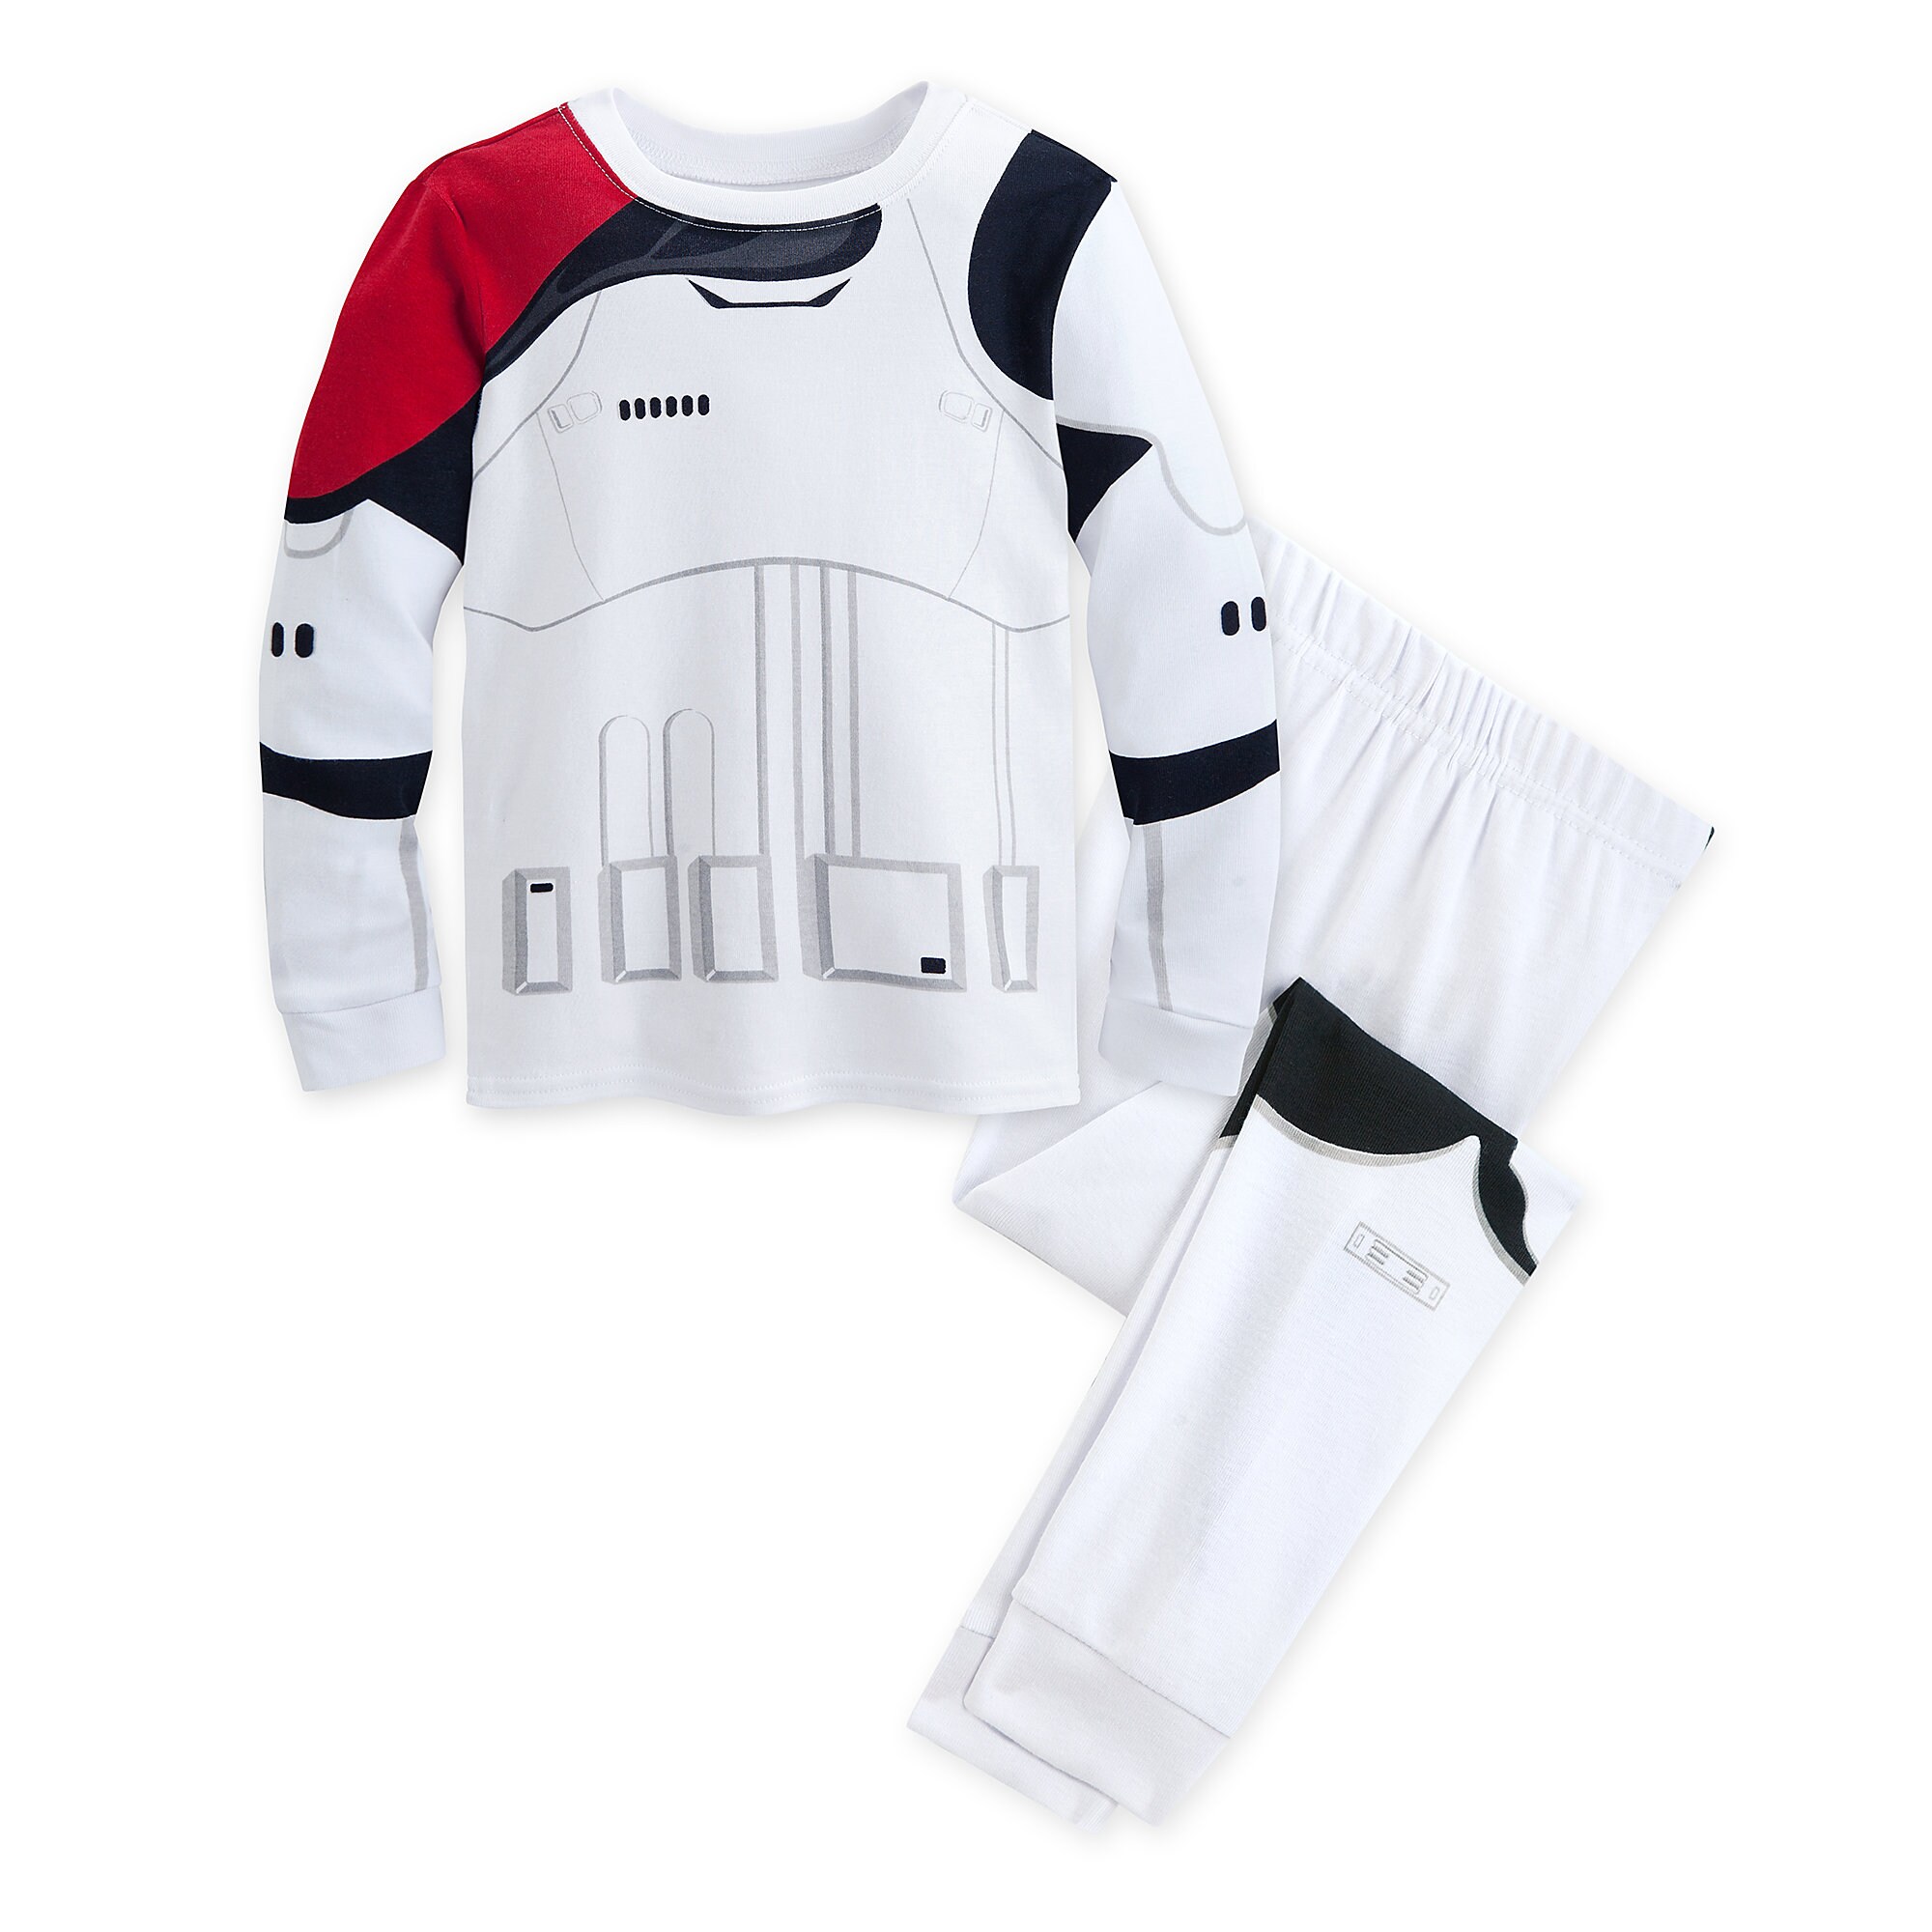 Stormtrooper PJ PALS for Kids - Star Wars: The Force Awakens